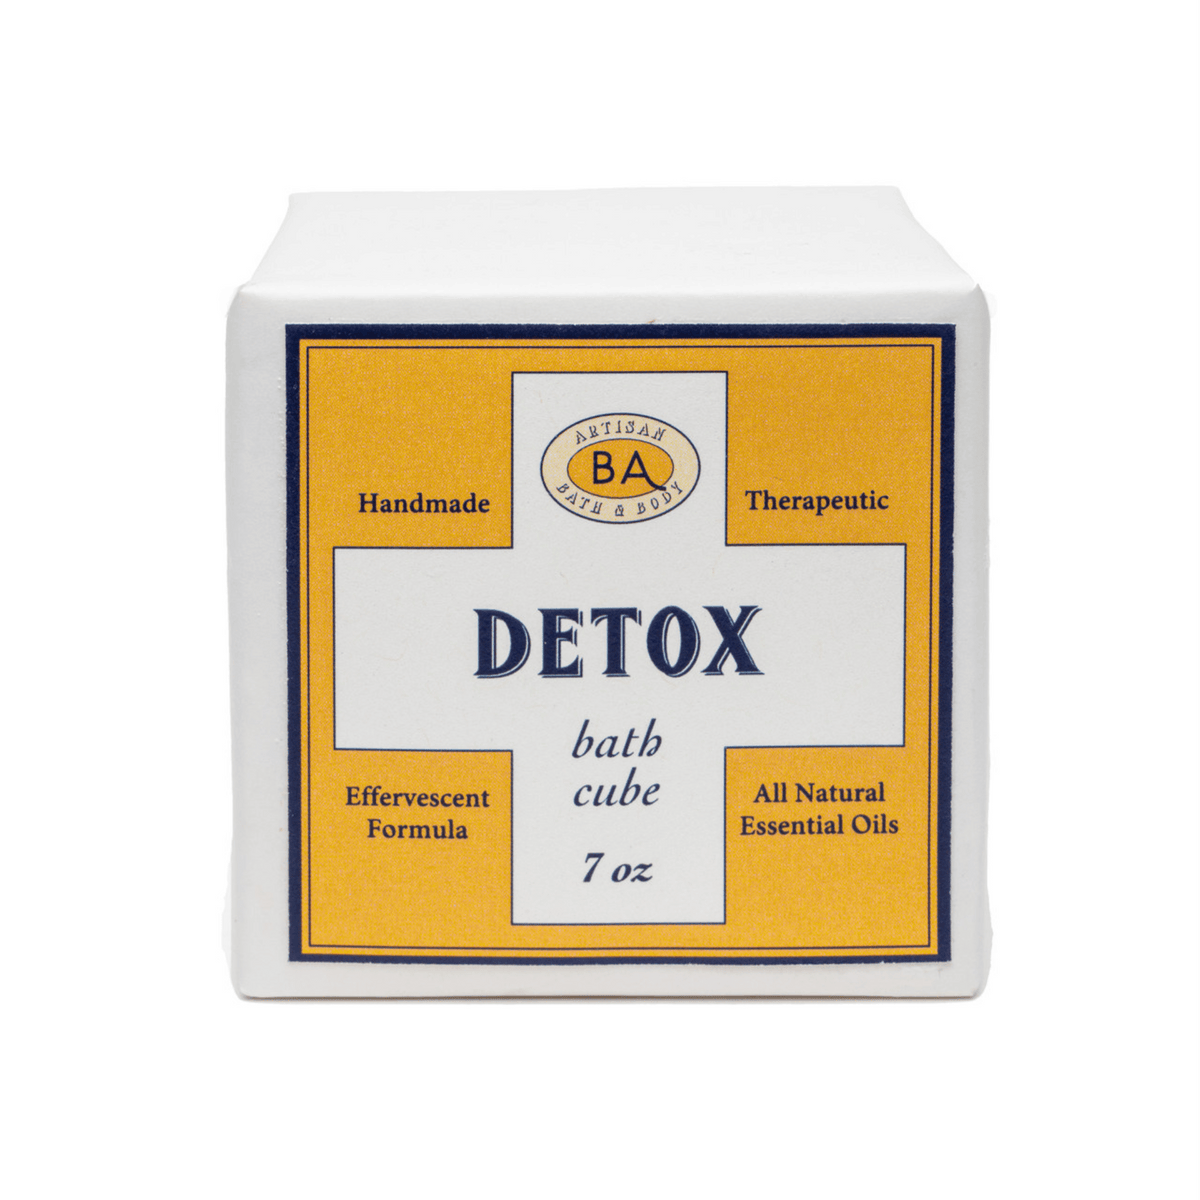 Primary Image of Detox Bath Cube